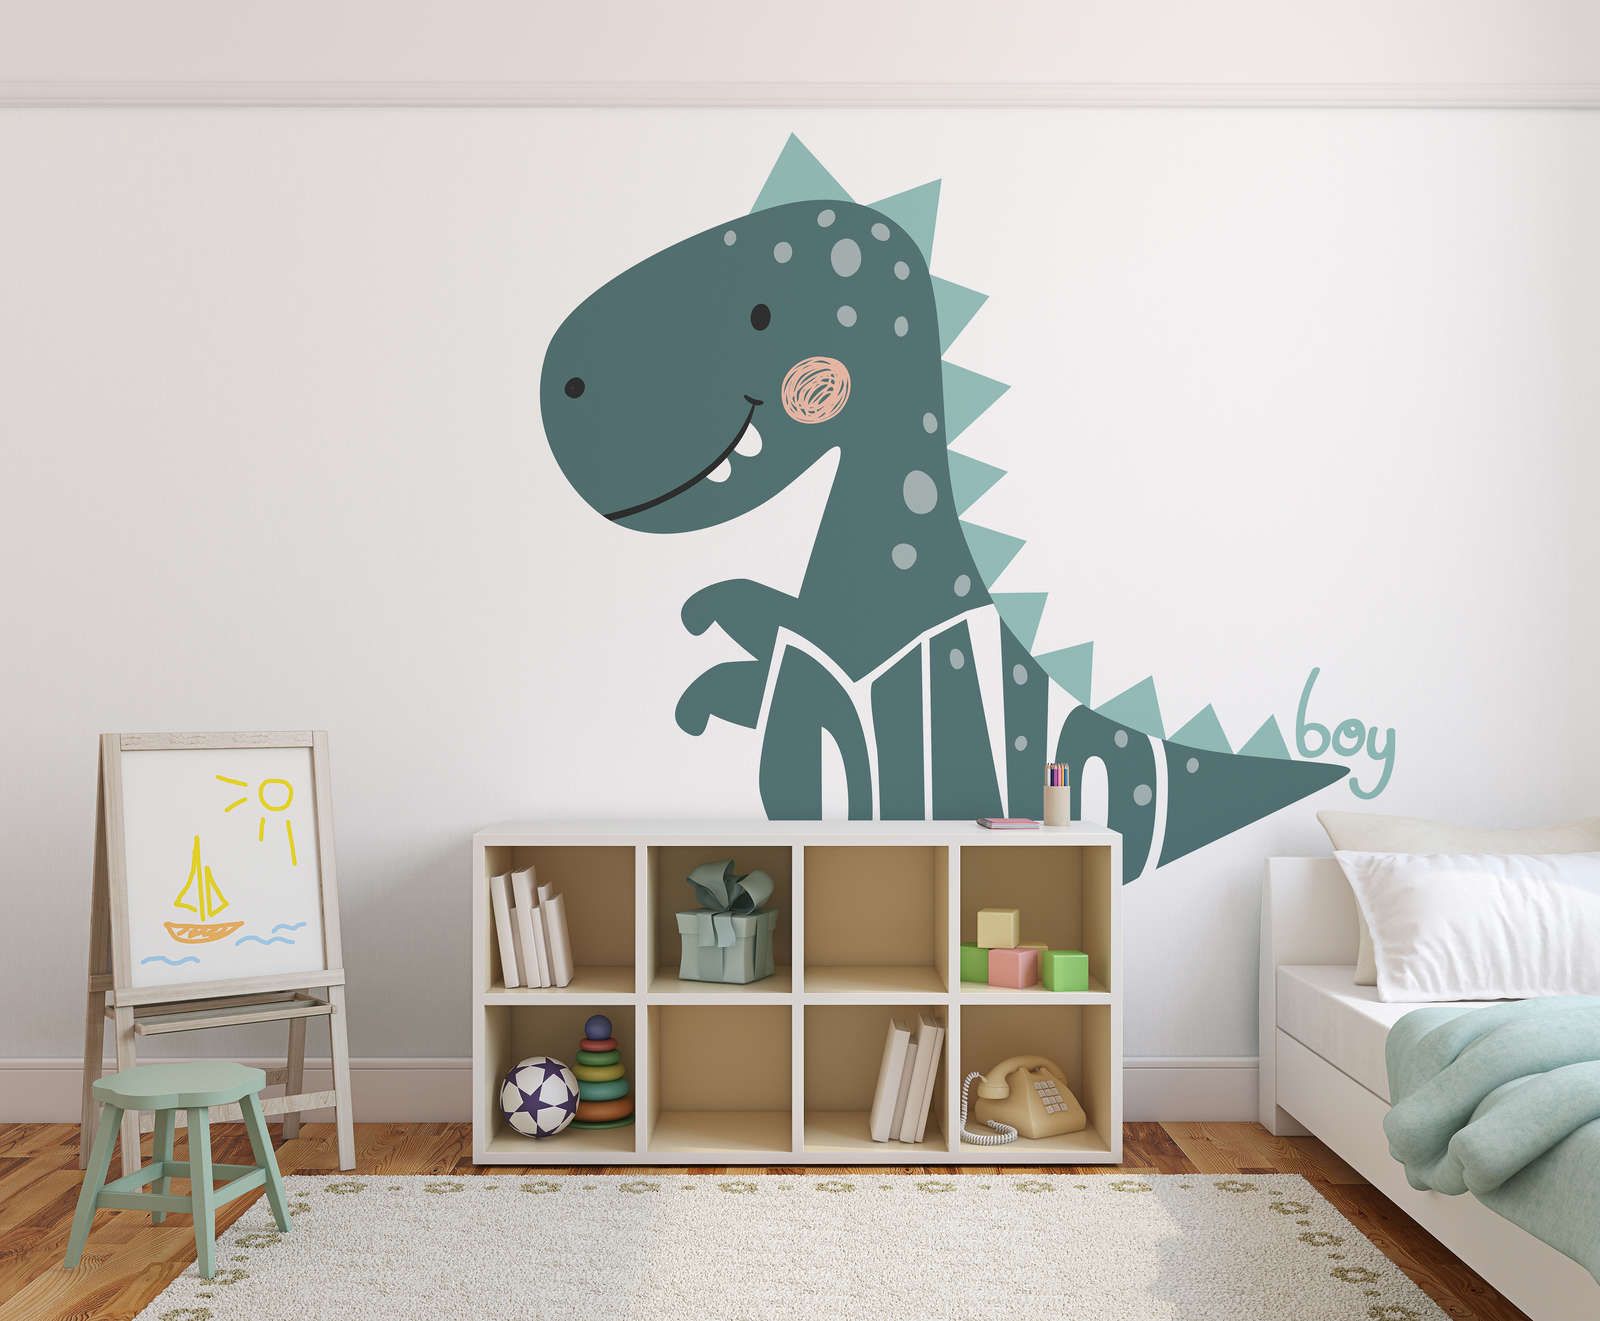             Children's Room Wallpaper with Dinosaur - Textured non-woven
        